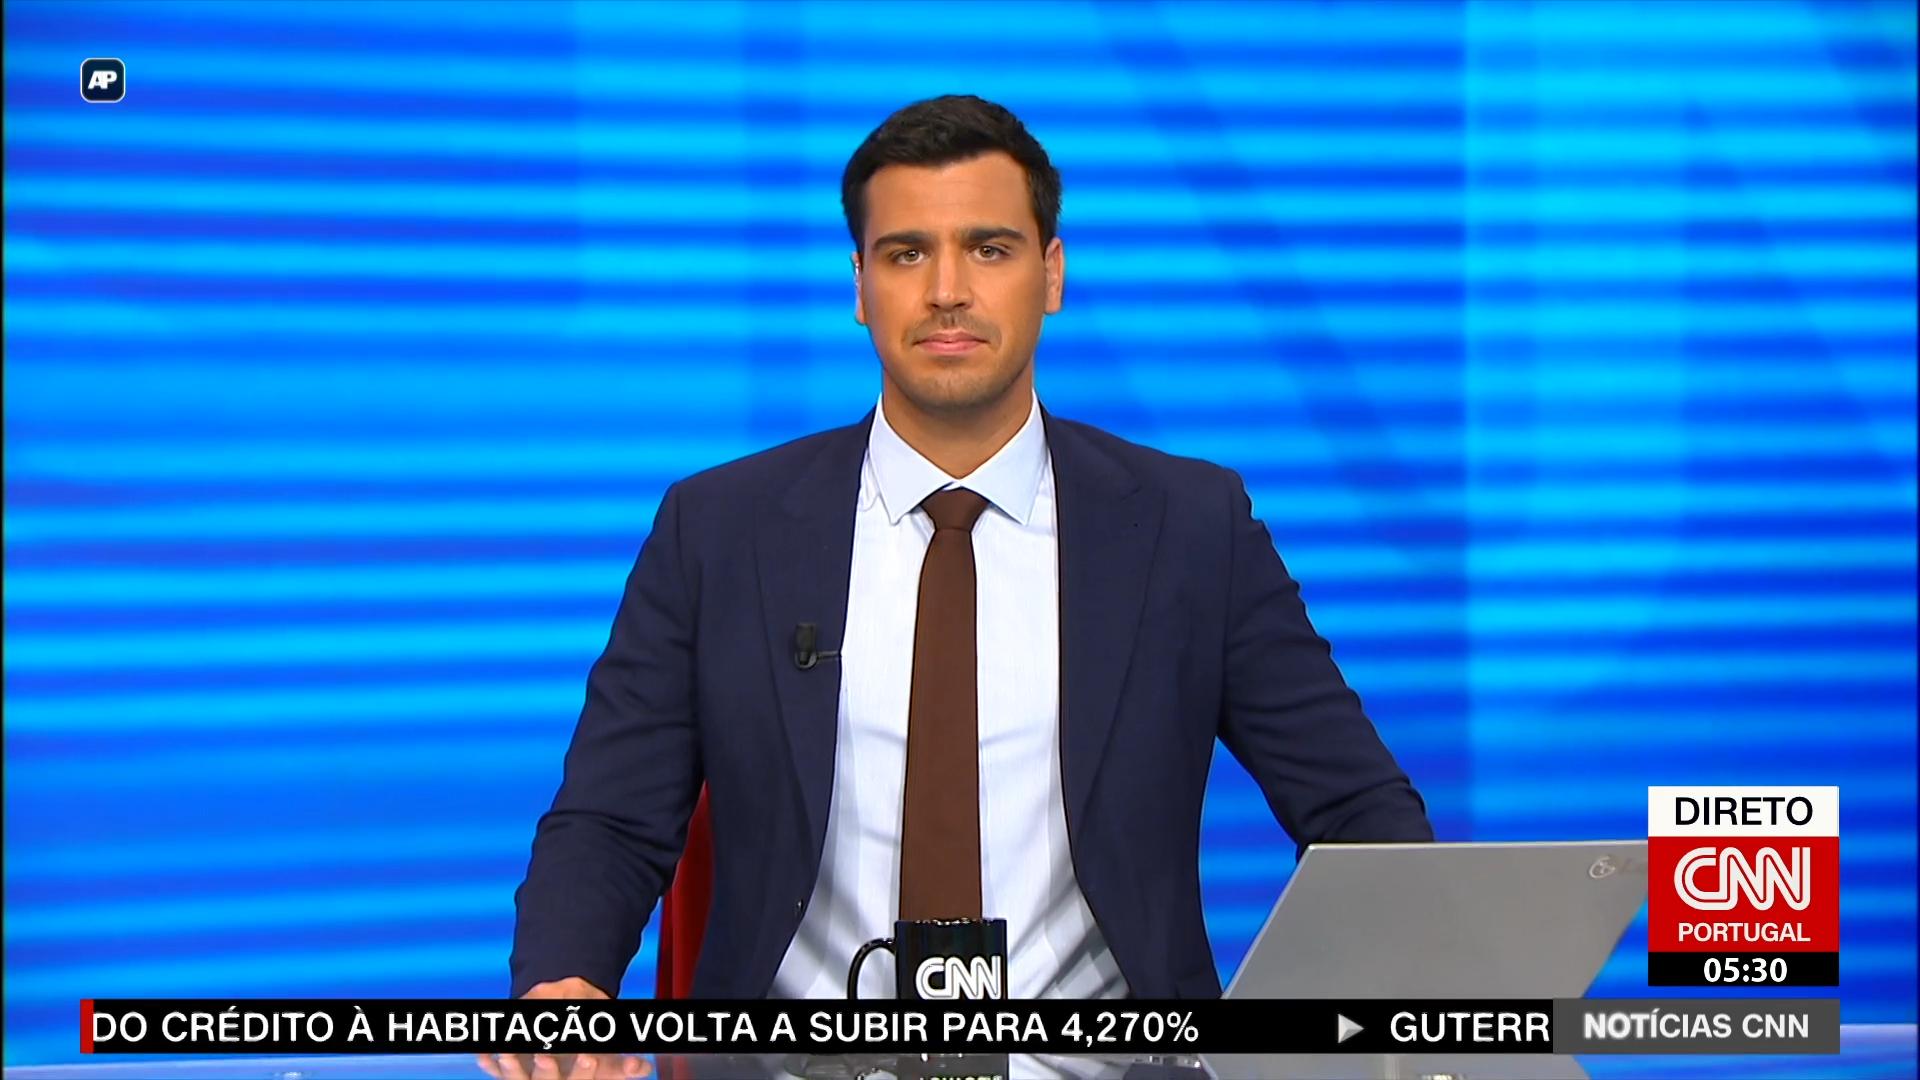 Hoje vai ser notícia - CNN Portugal